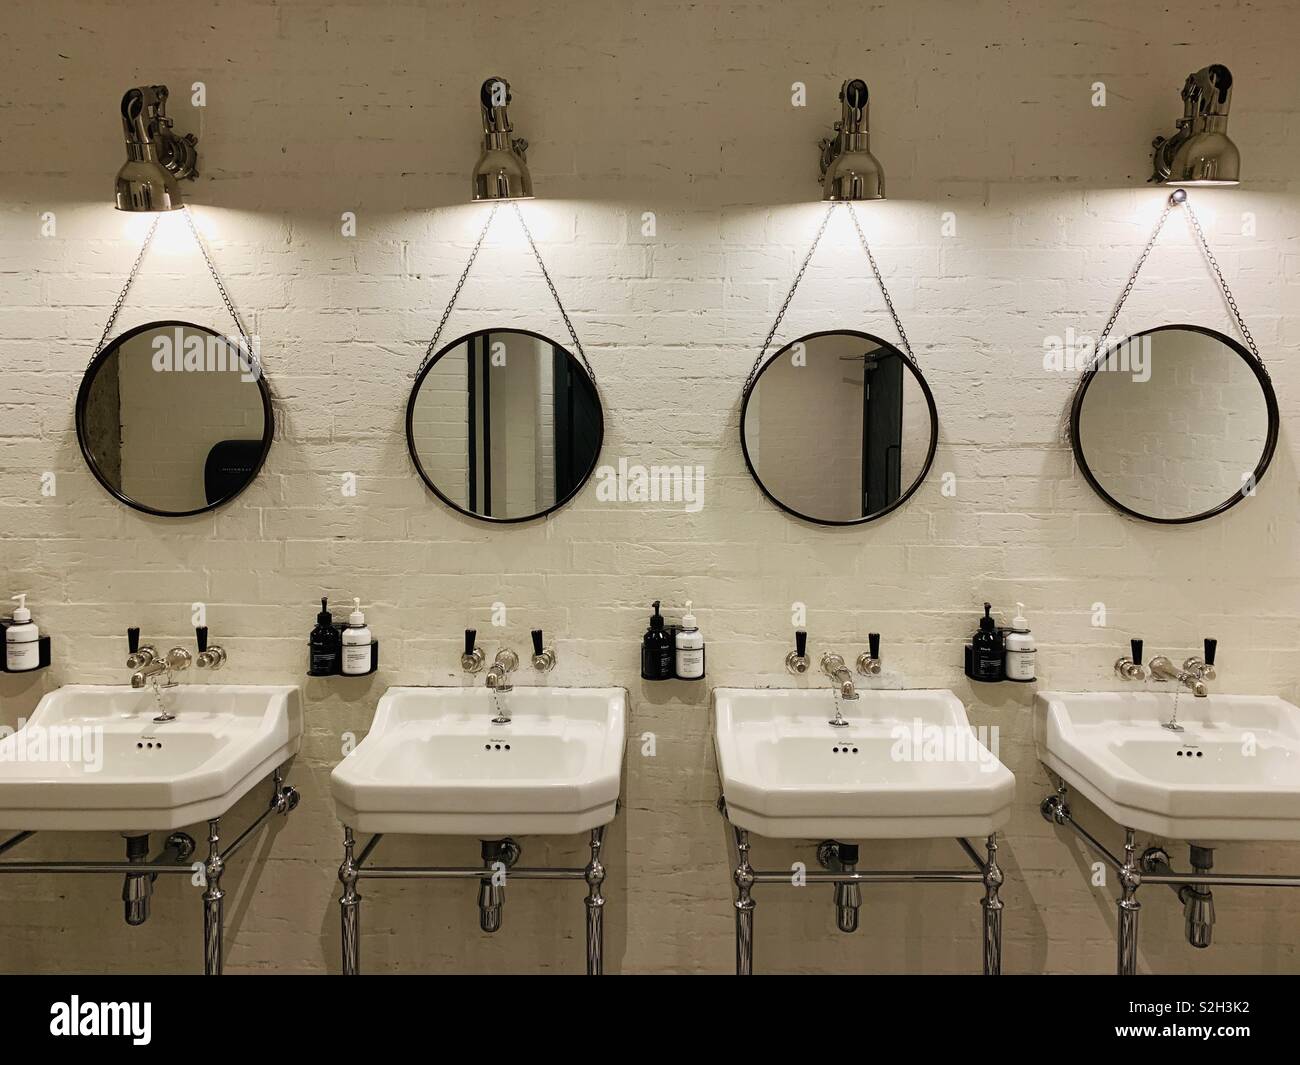 Row of bathroom basins and mirrors Stock Photo